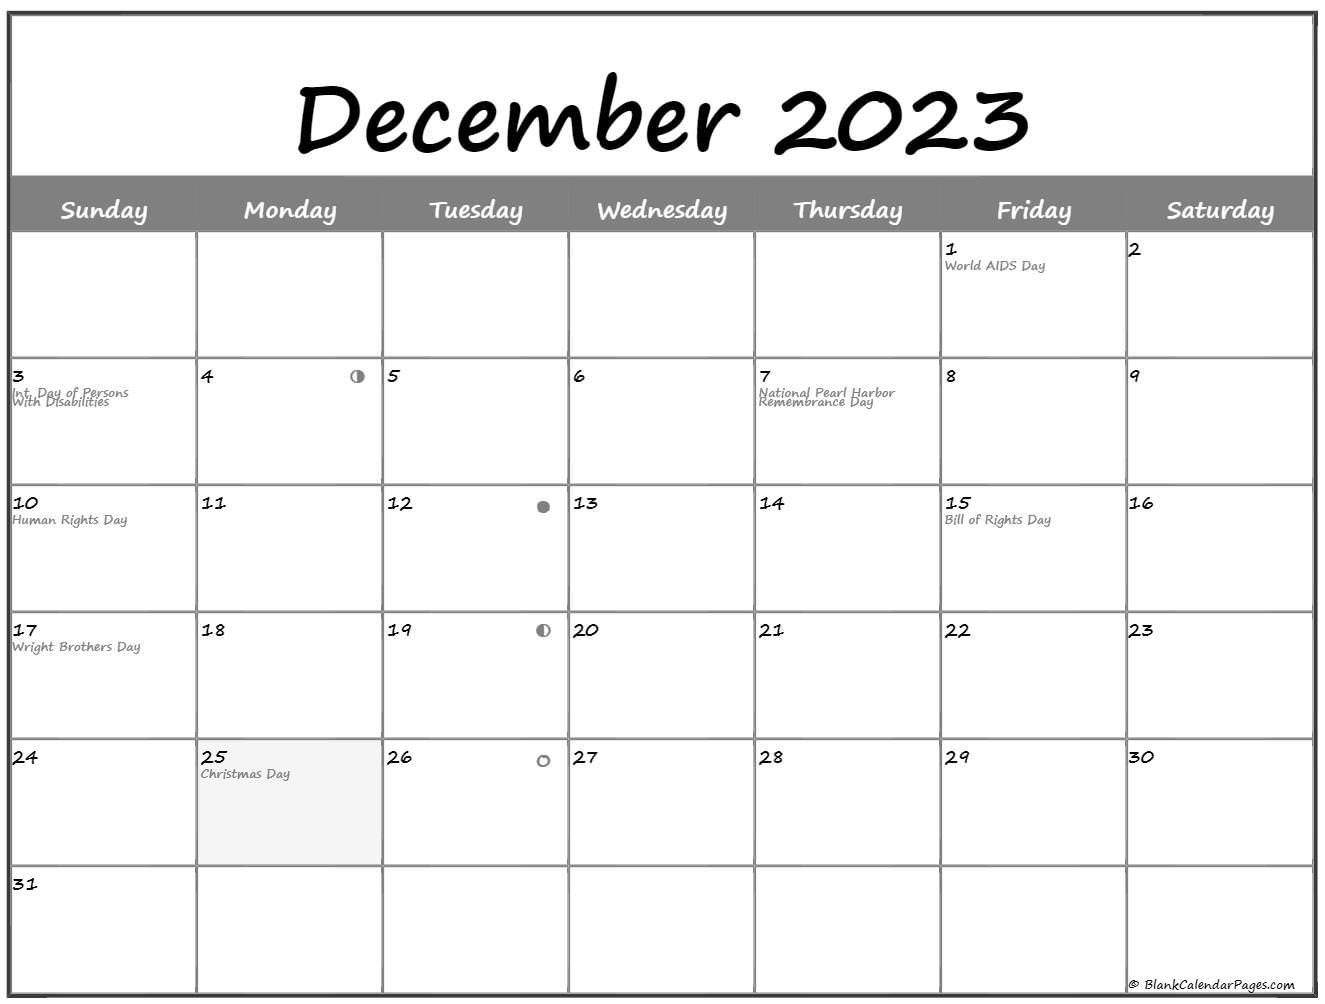 December 2023 Lunar Calendar 